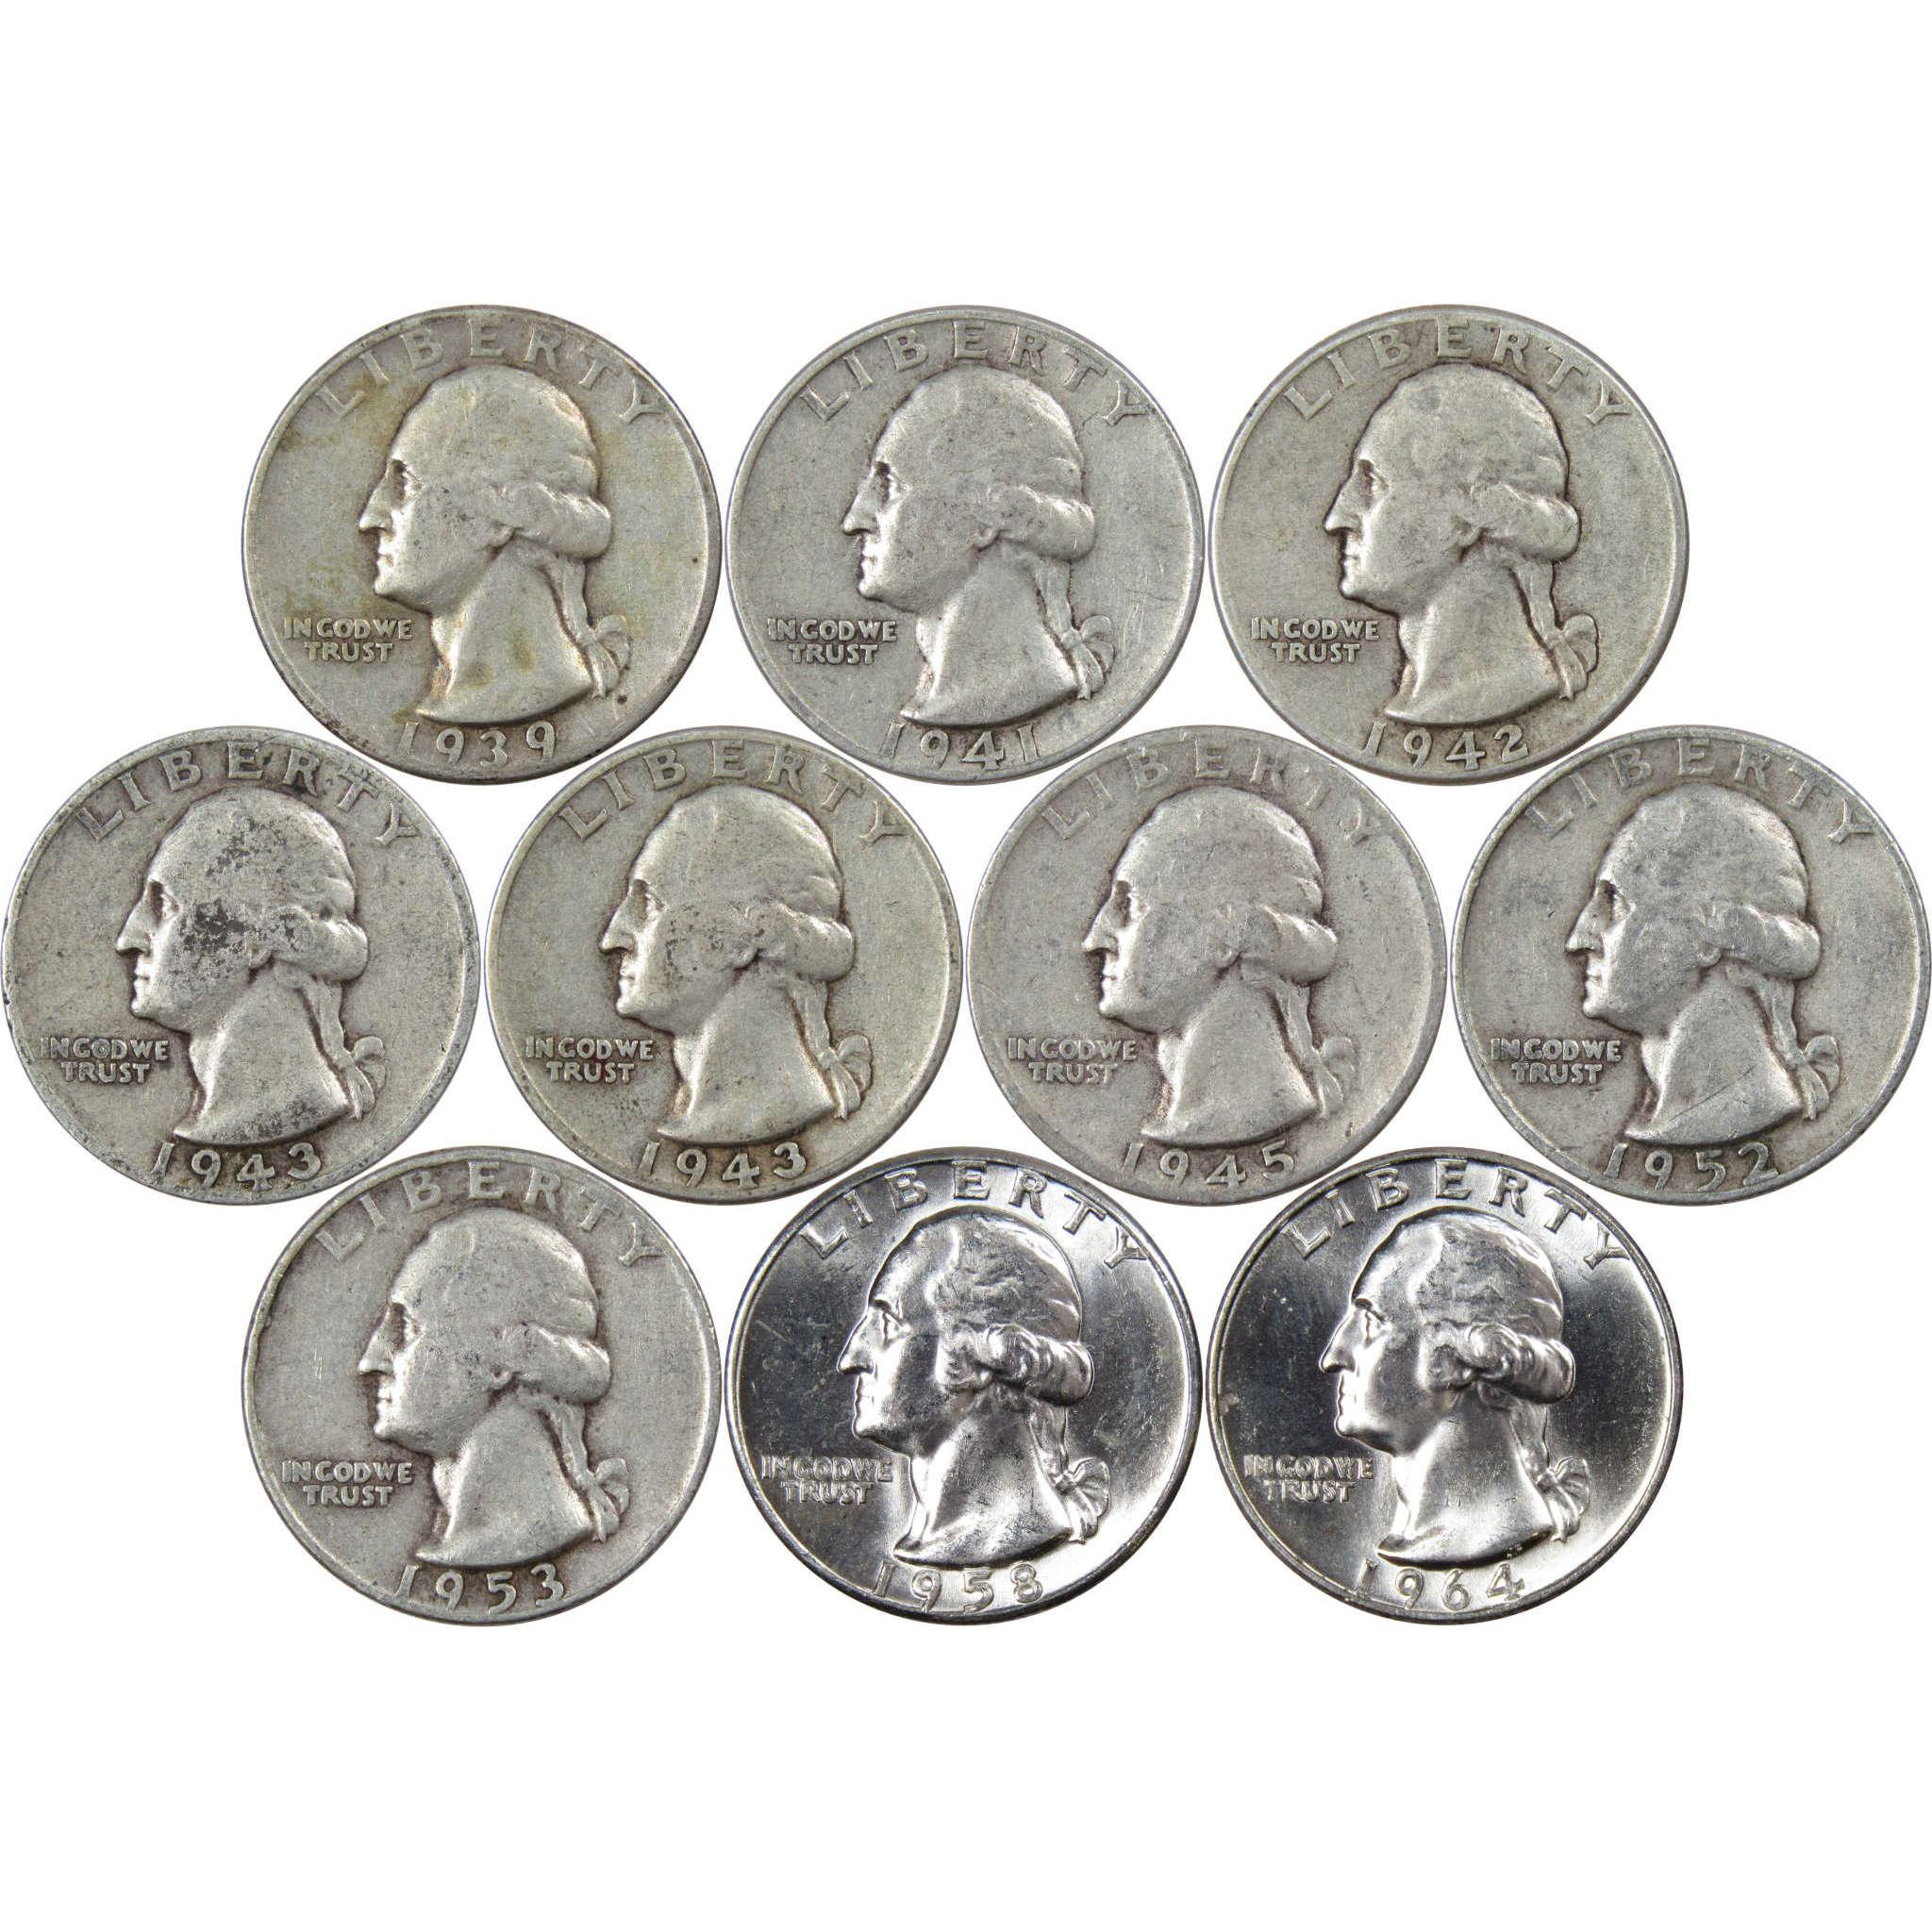 Washington Quarter 10 Coin Set F Fine 90% Silver 25c with Folder